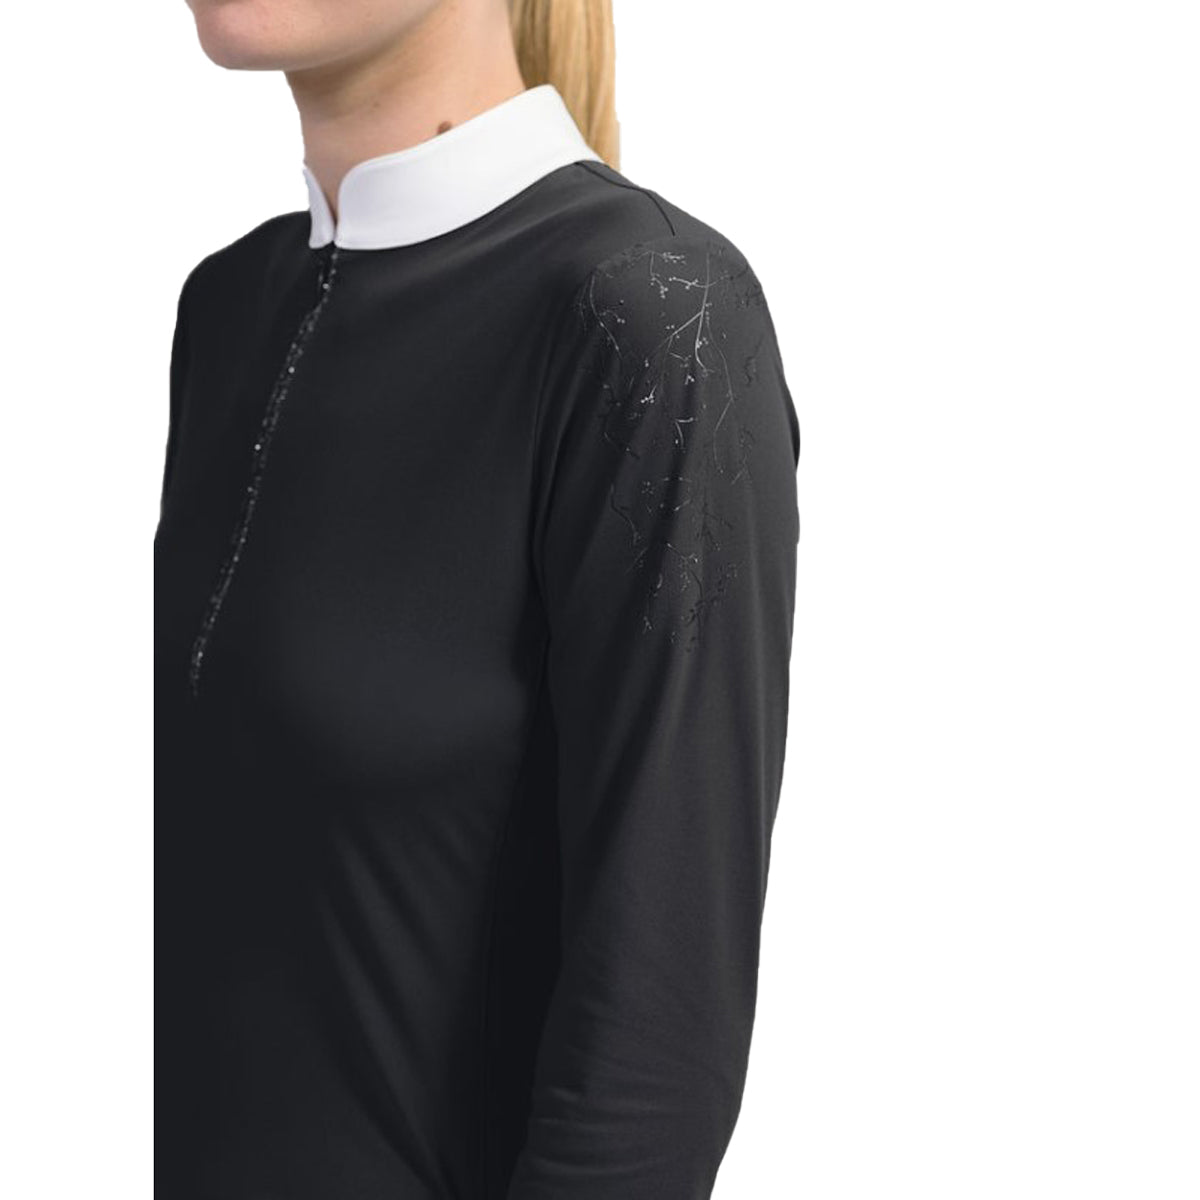 Samshield Women's Aloise Long Sleeve Show Shirt